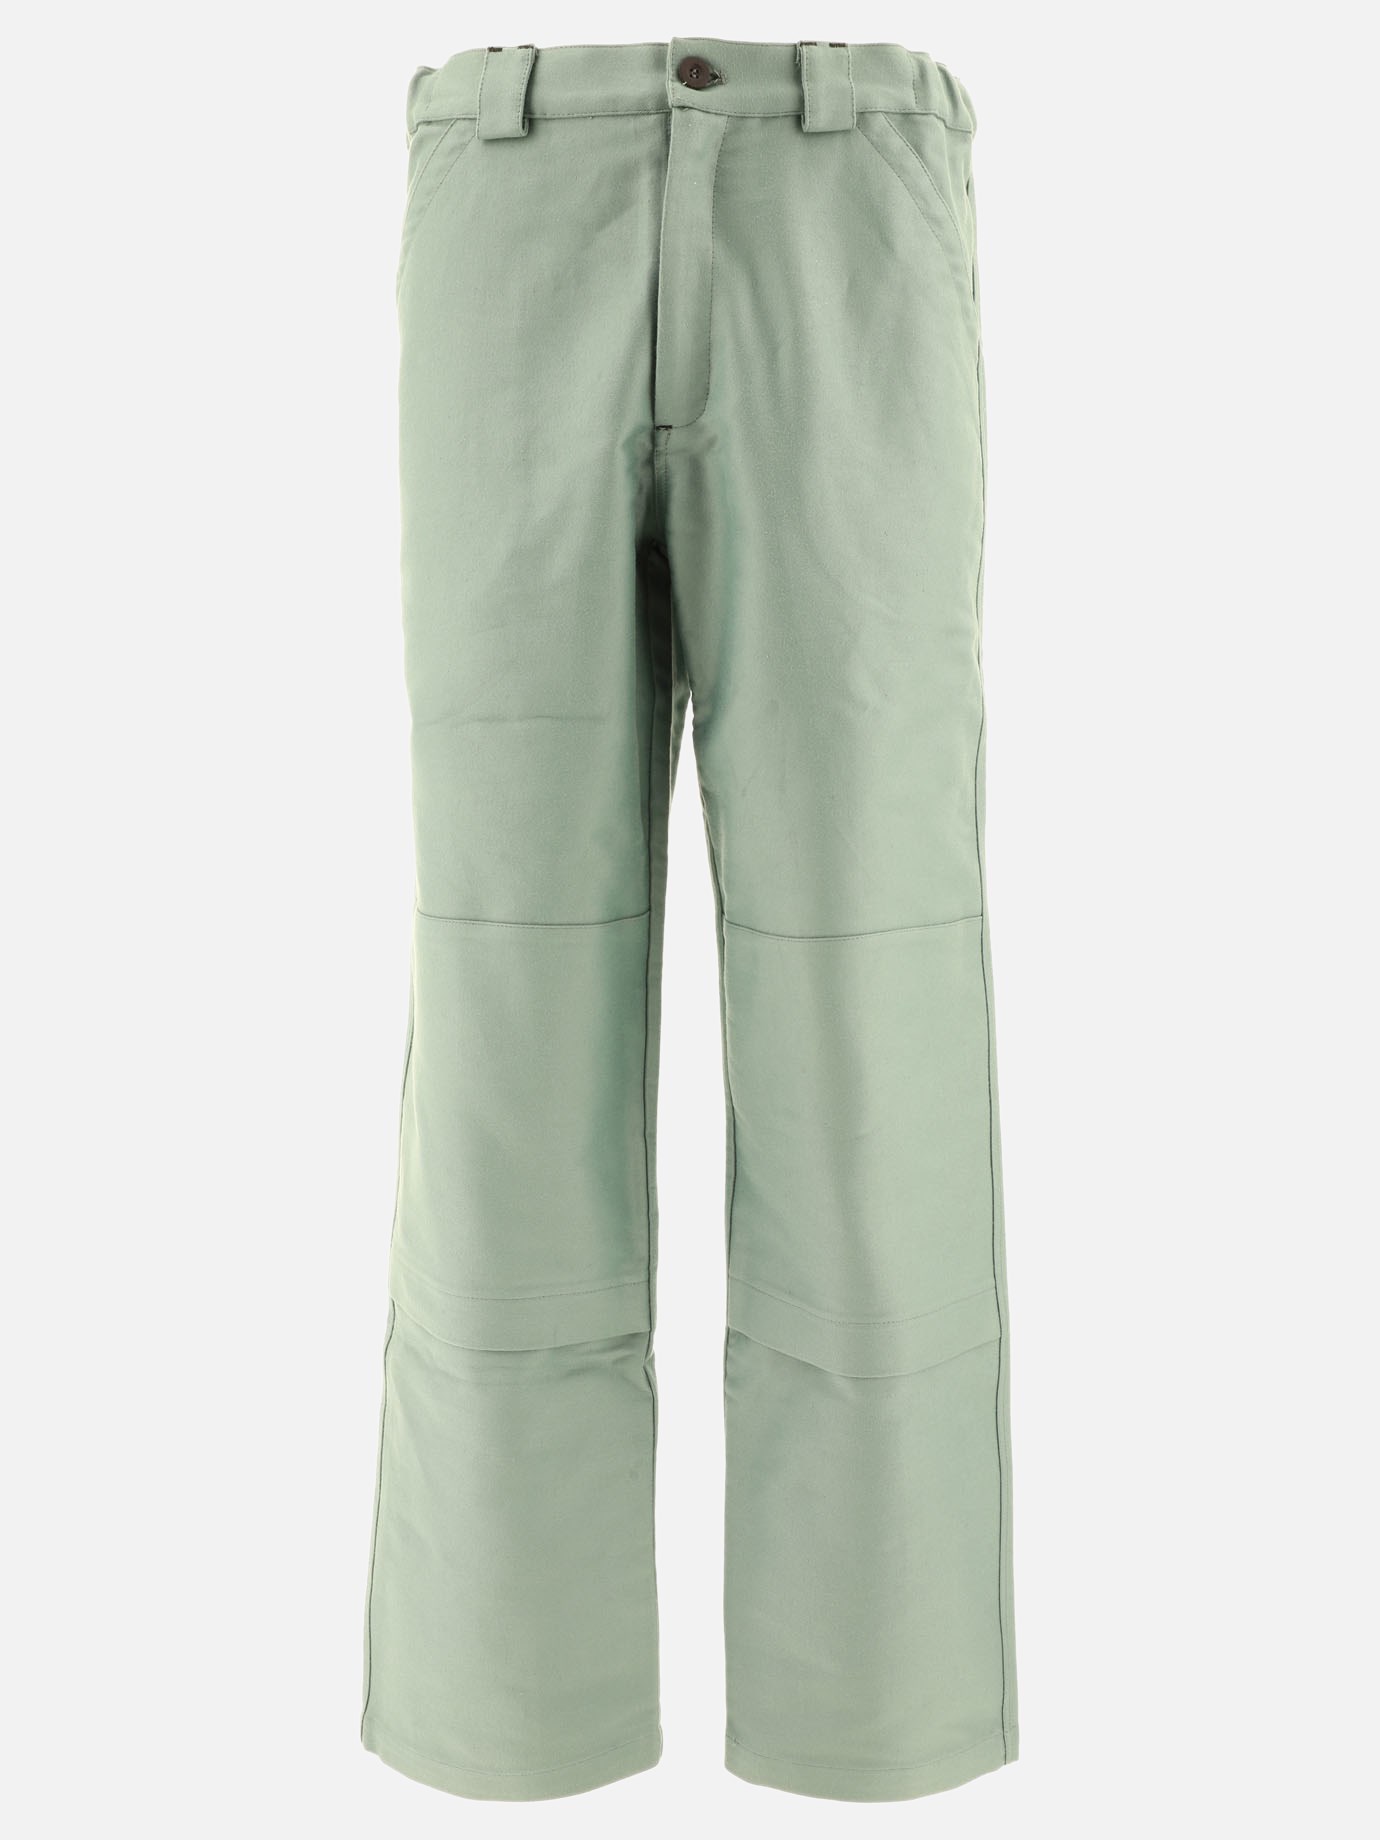 Pantaloni  Replicated Bold Fustian by Gr10K - 3